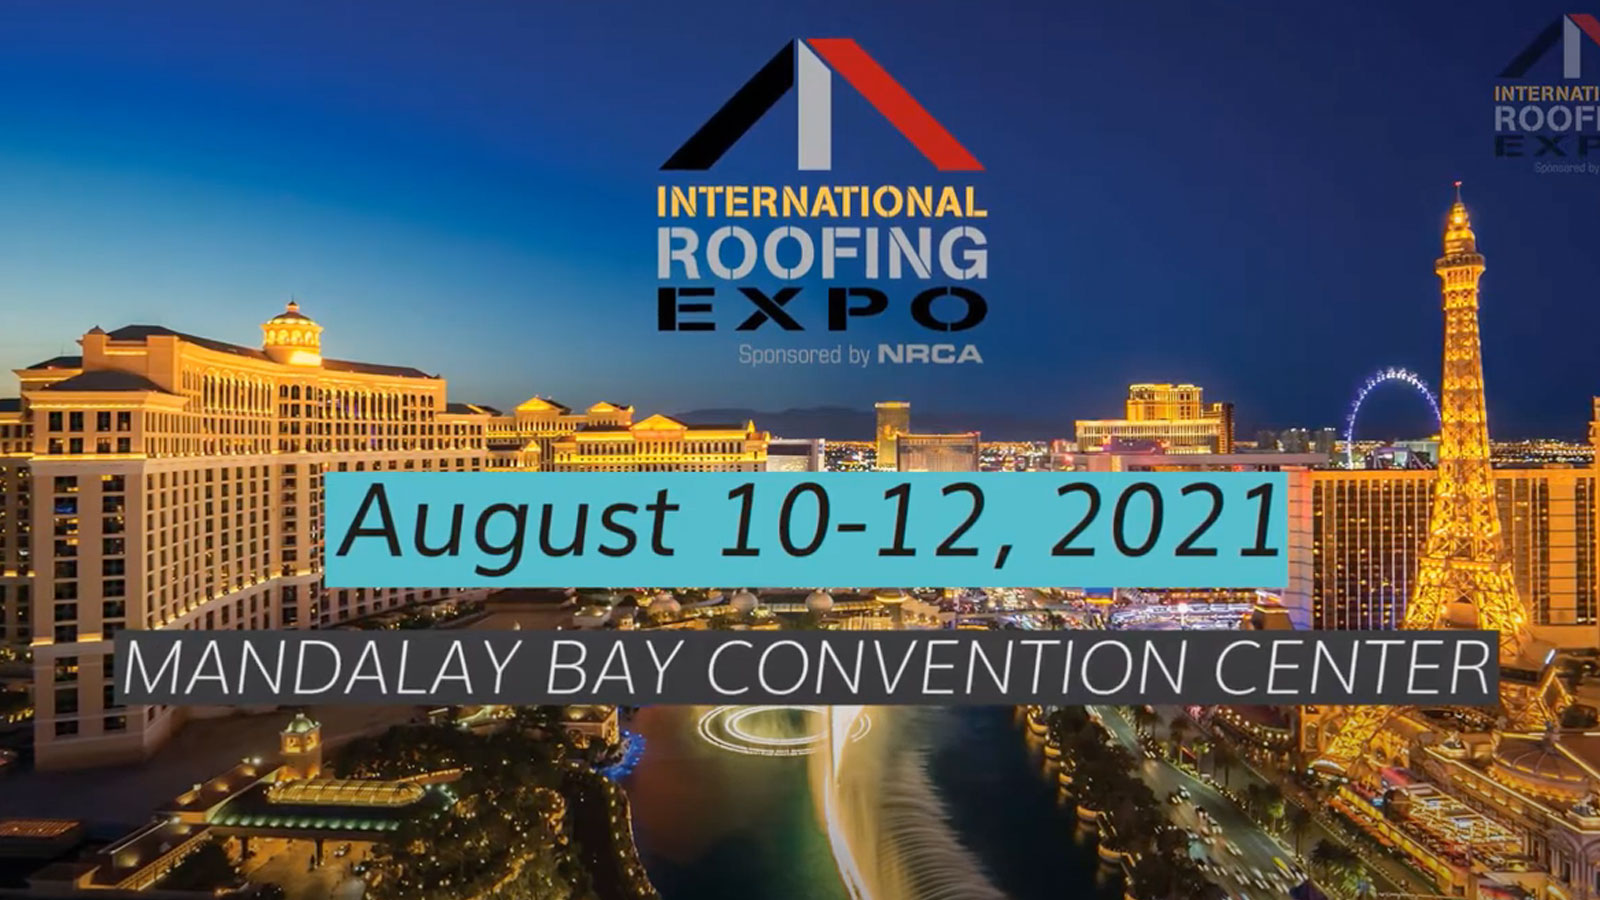 International Roofing Expo 2021 // August 10-12 // Las Vegas, NV